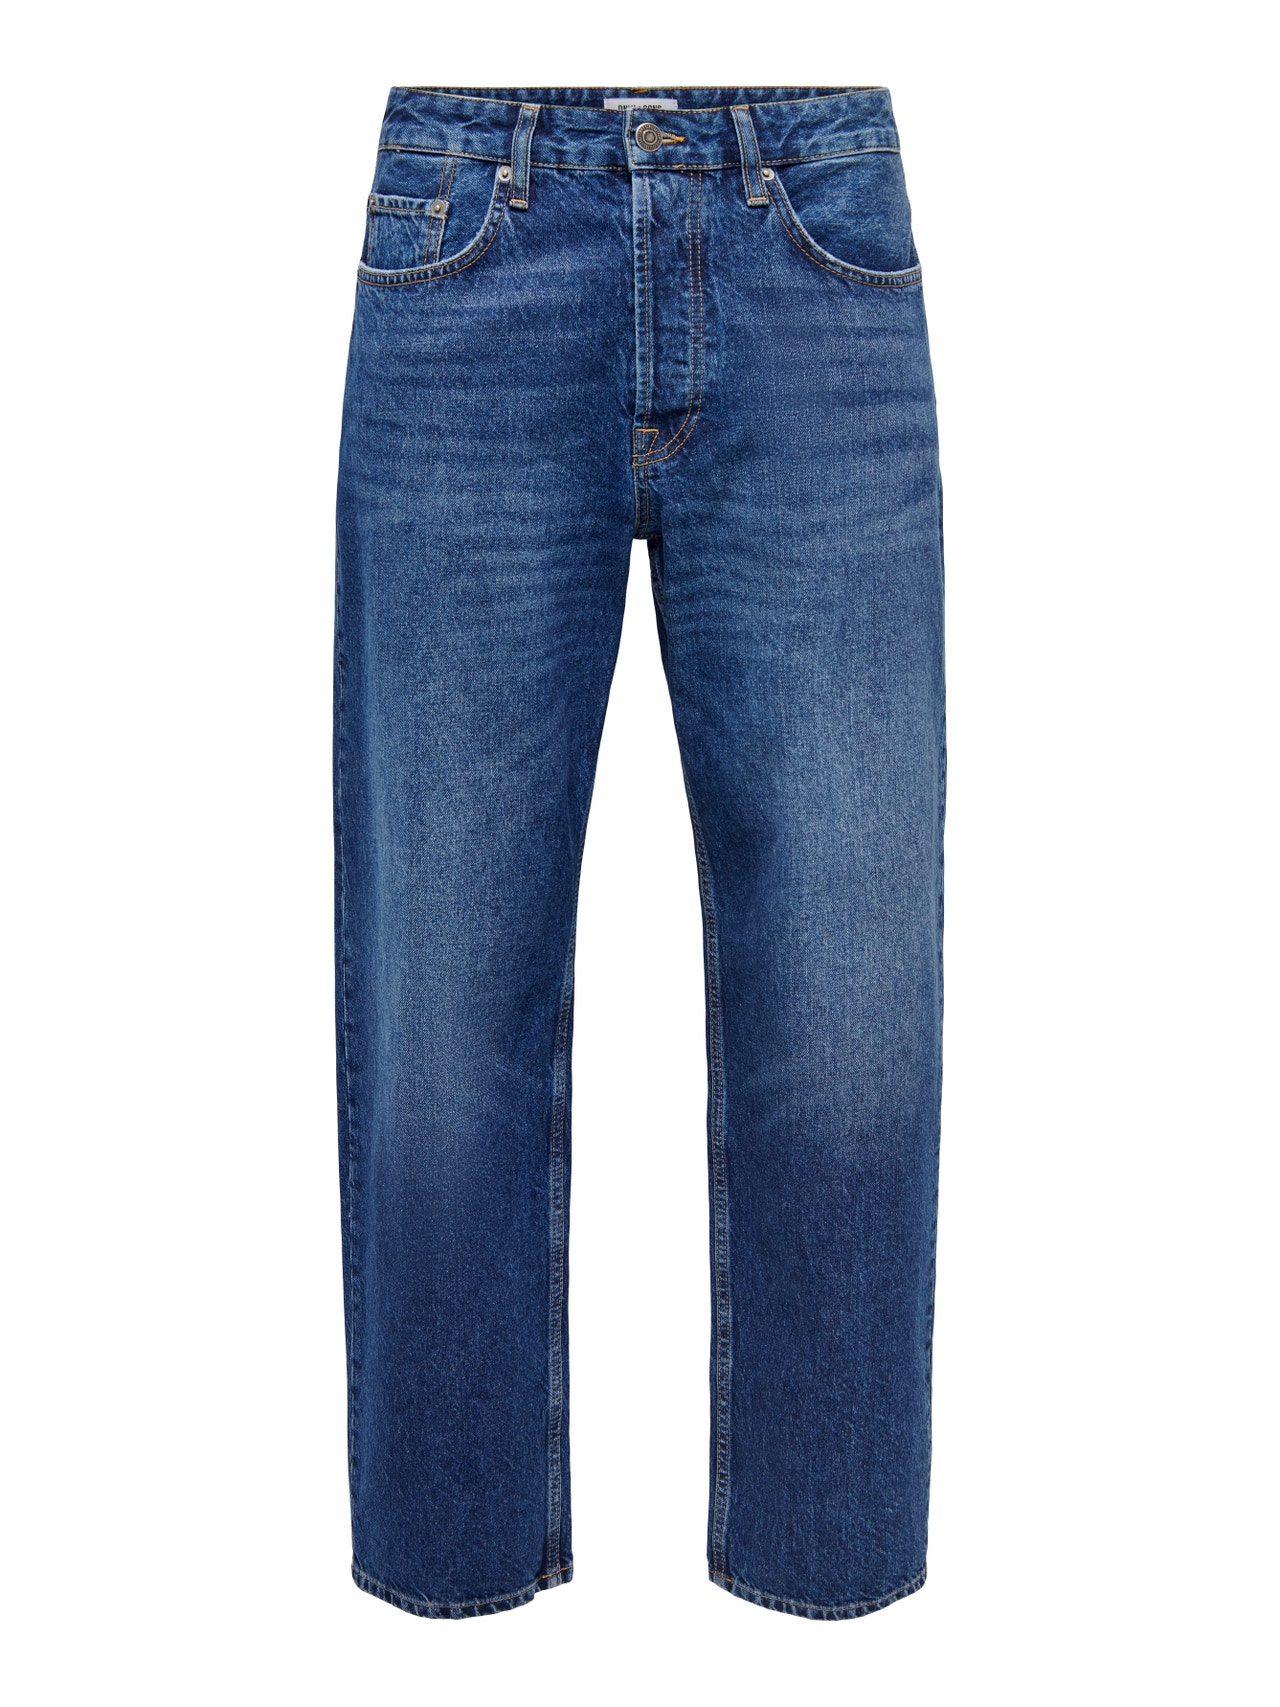 ONLY & SONS Loose Fit Jeans -Dark Blue Denim - 22025230